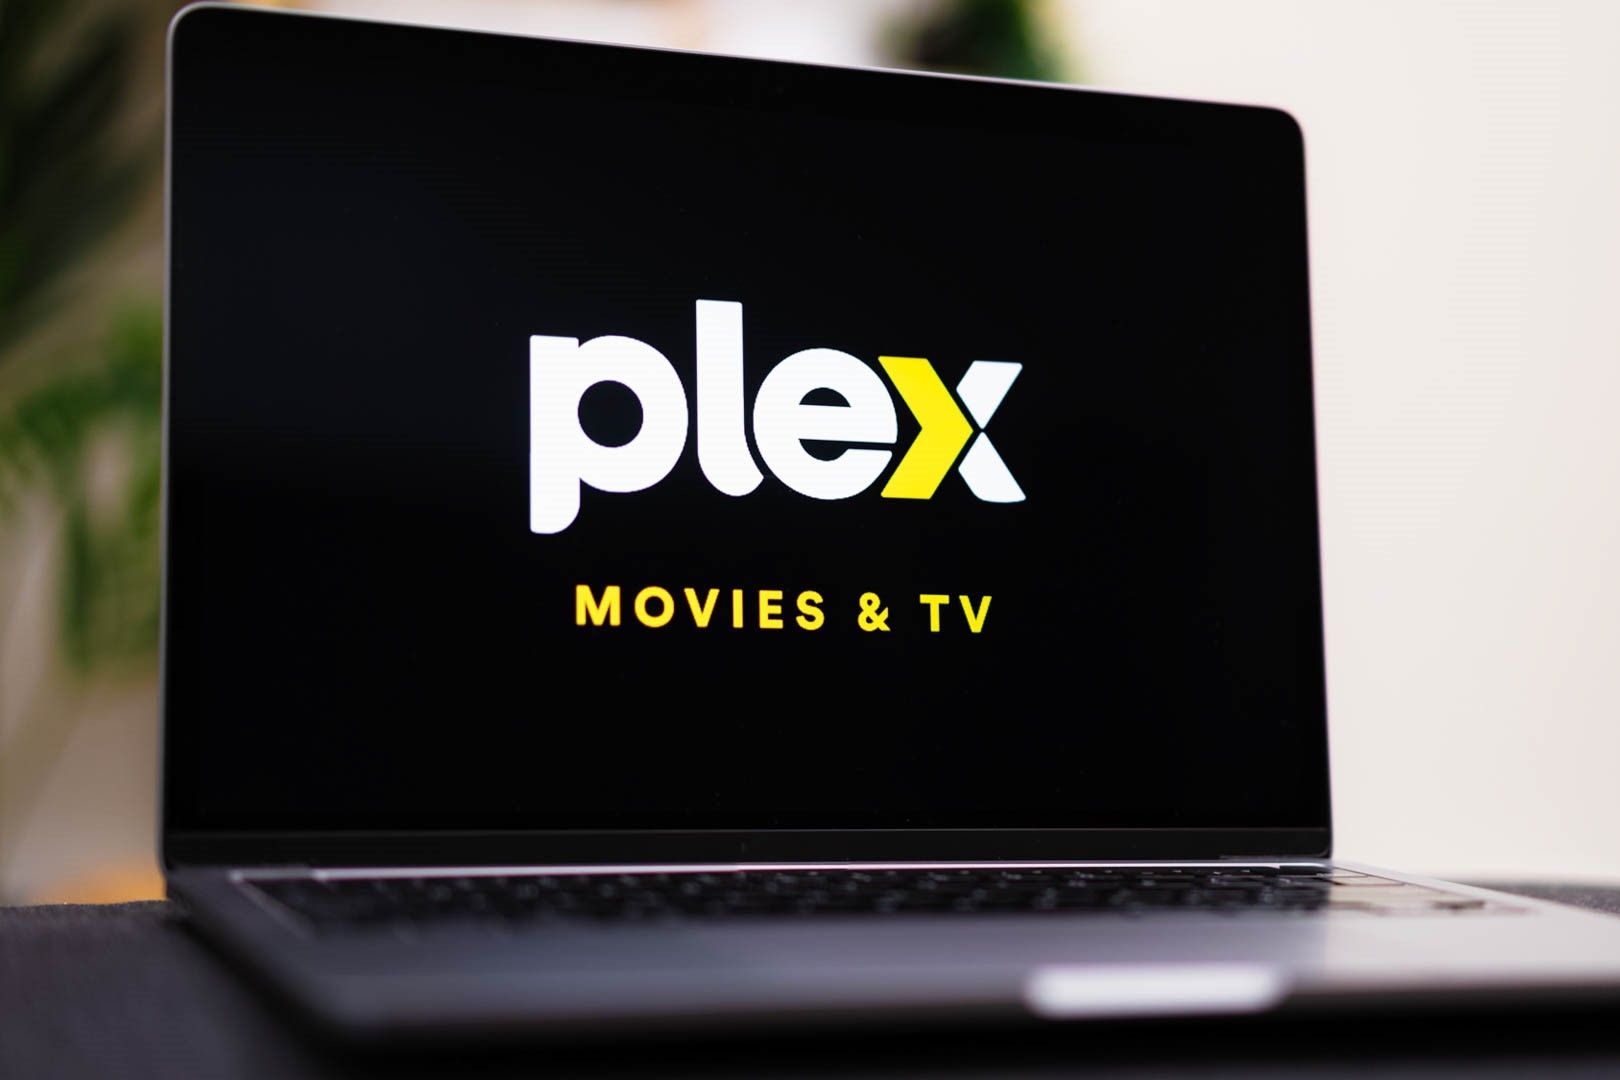 Plex logo on a laptop screen